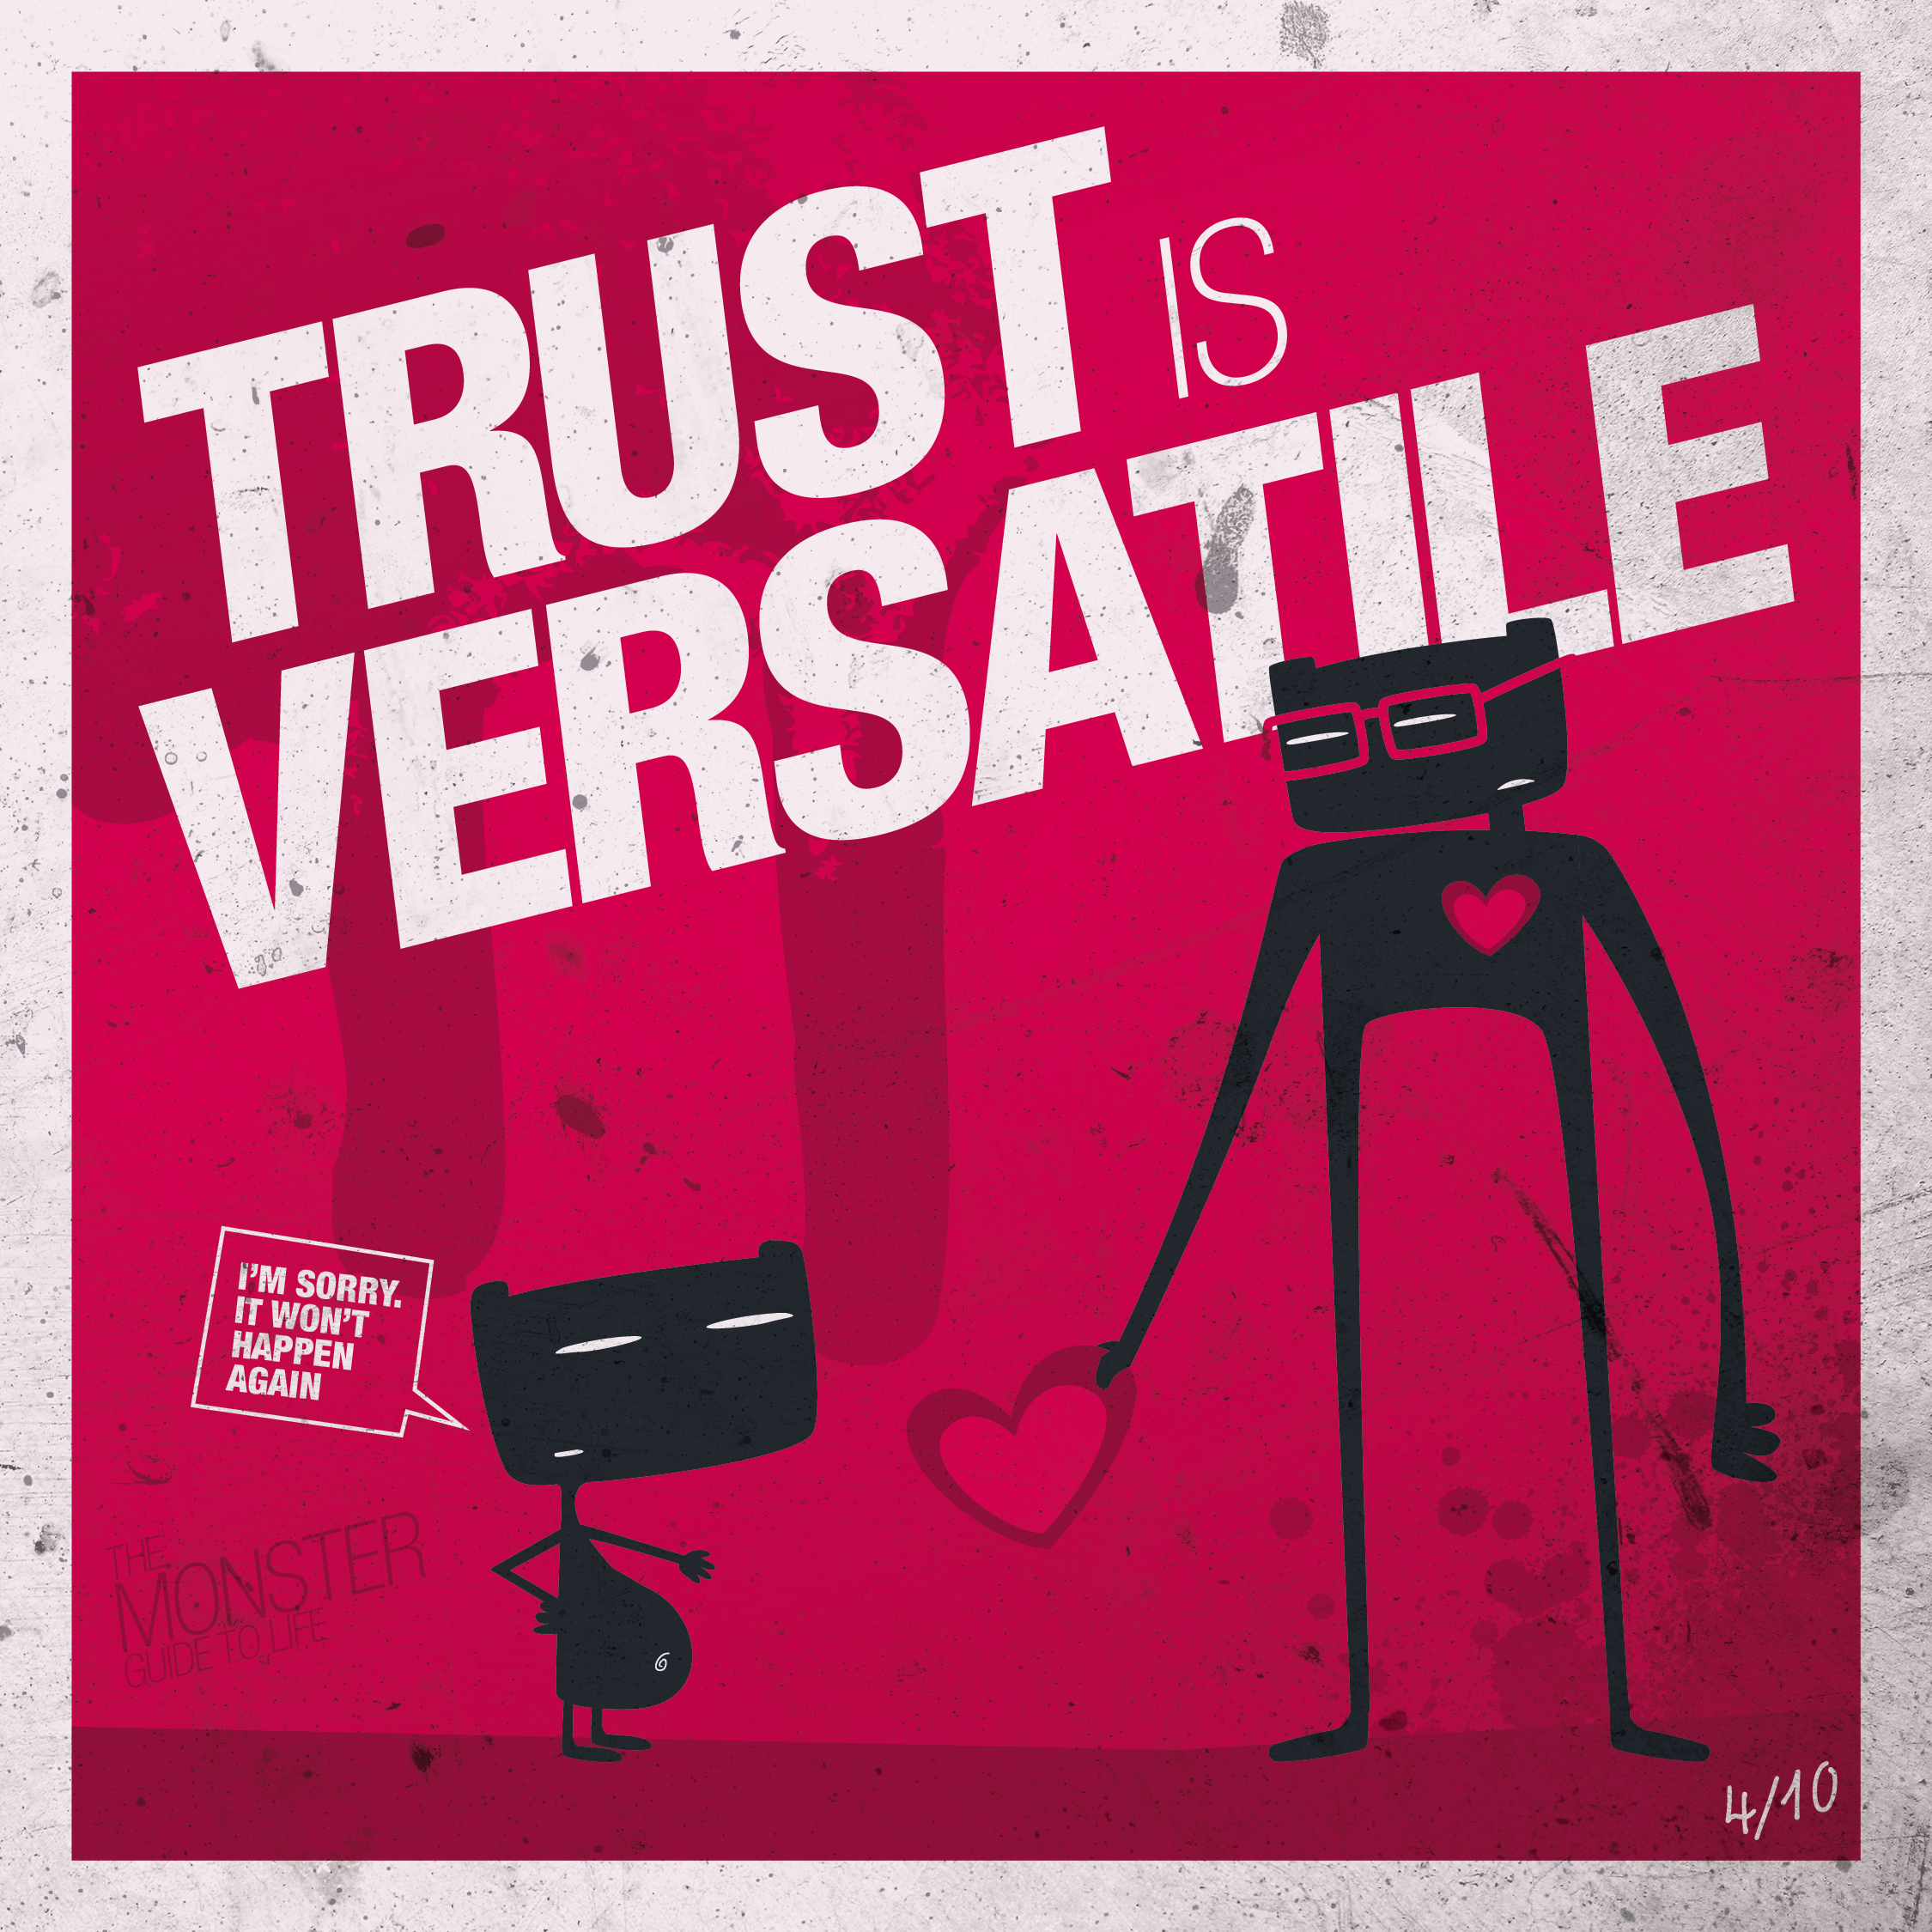 Trust is versatile